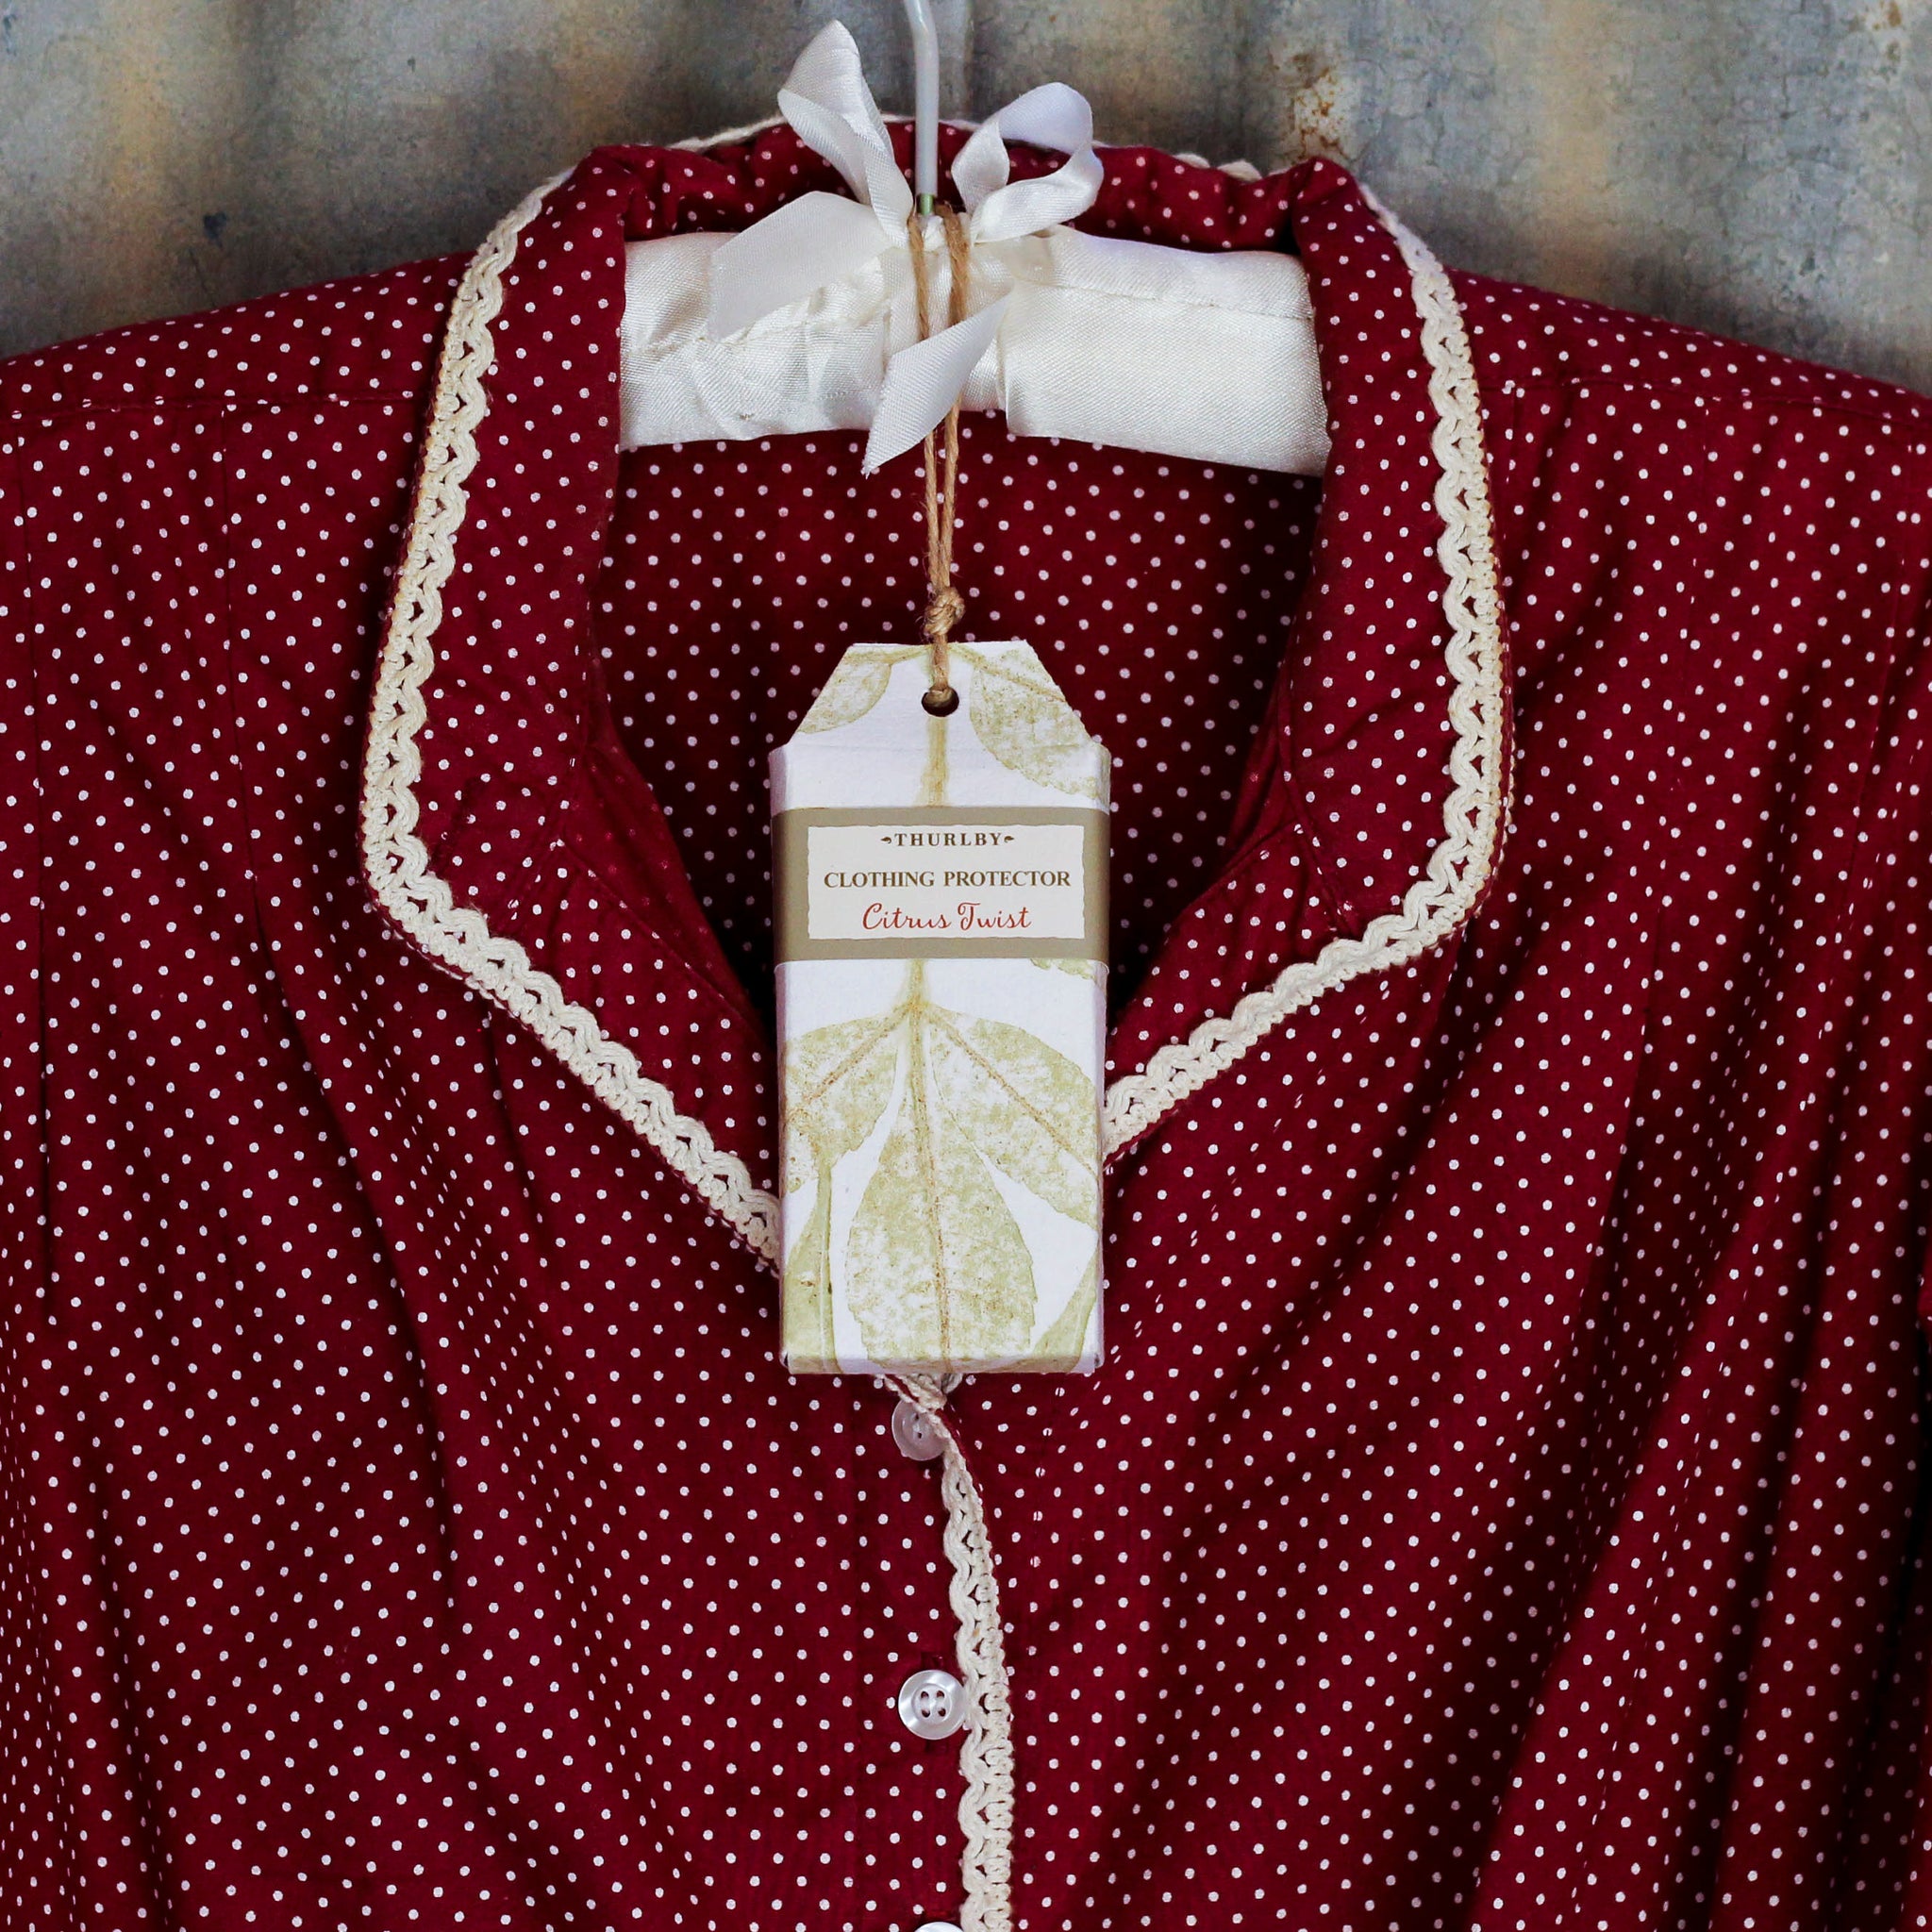 Thurlby Clothing Protector - Citrus Twist on shirt hanger